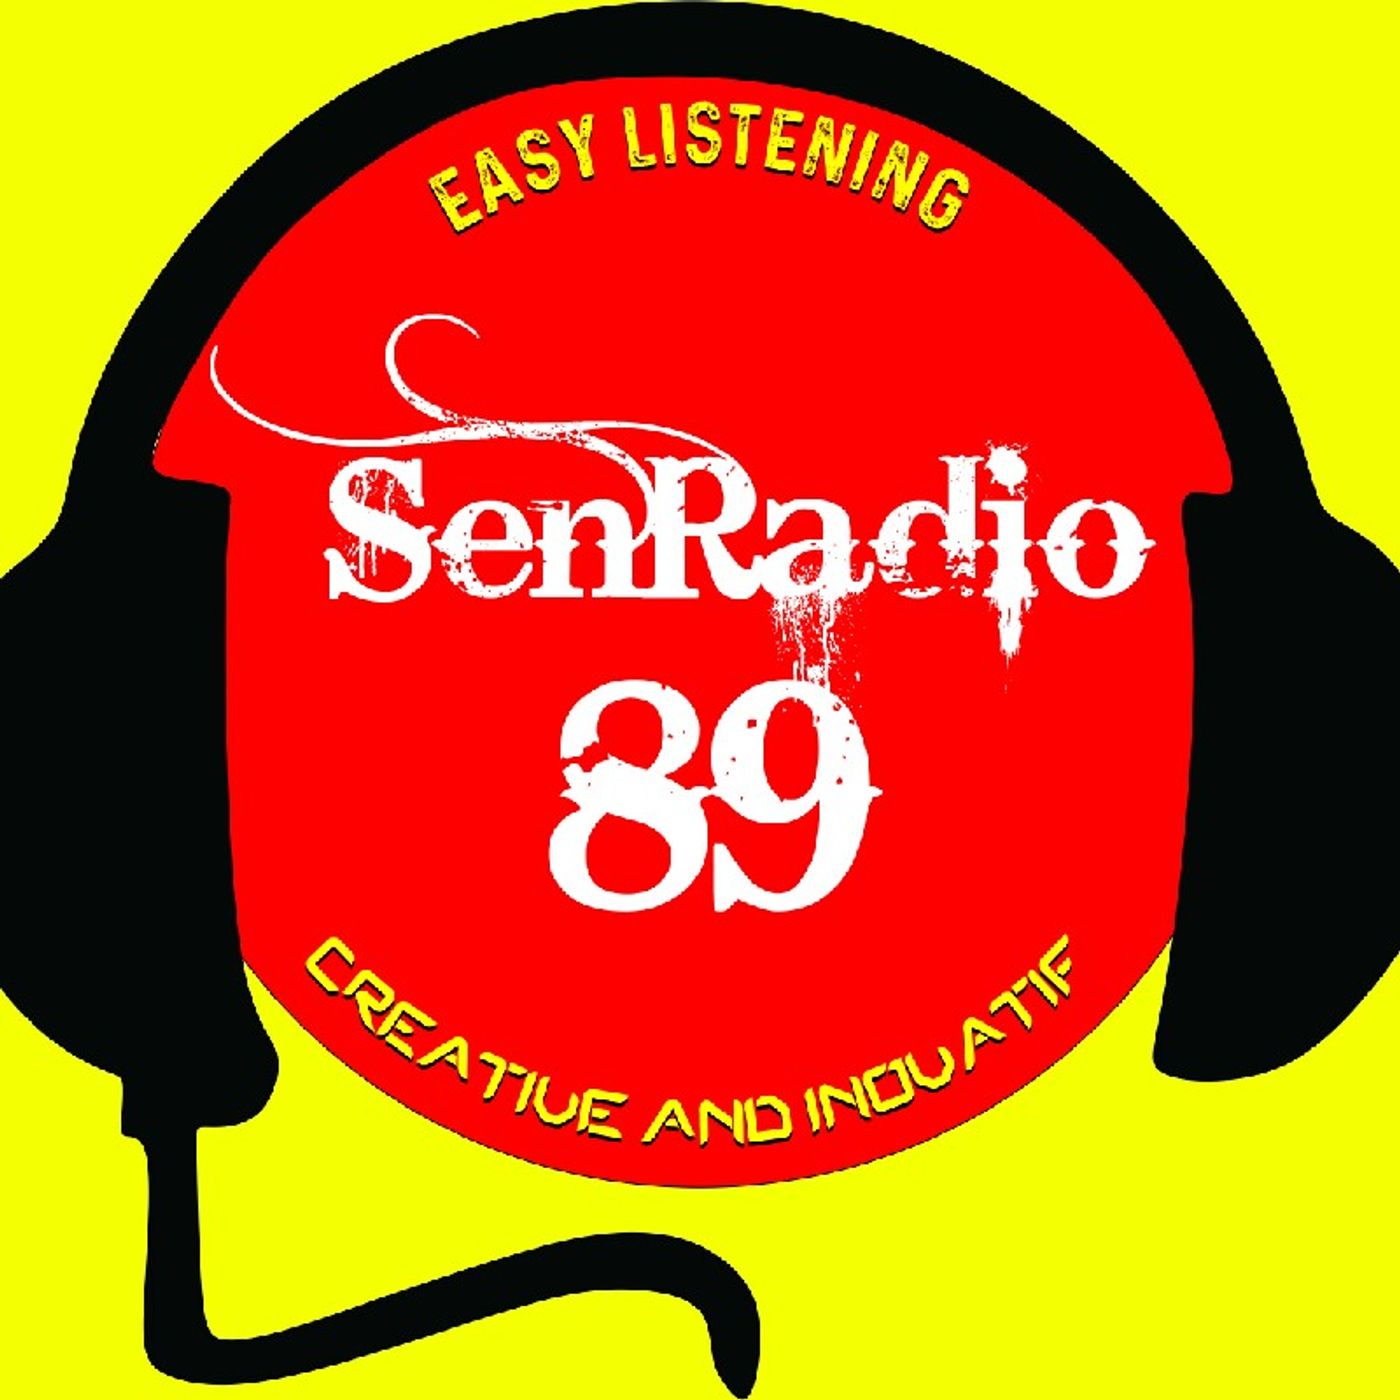 Senradio89